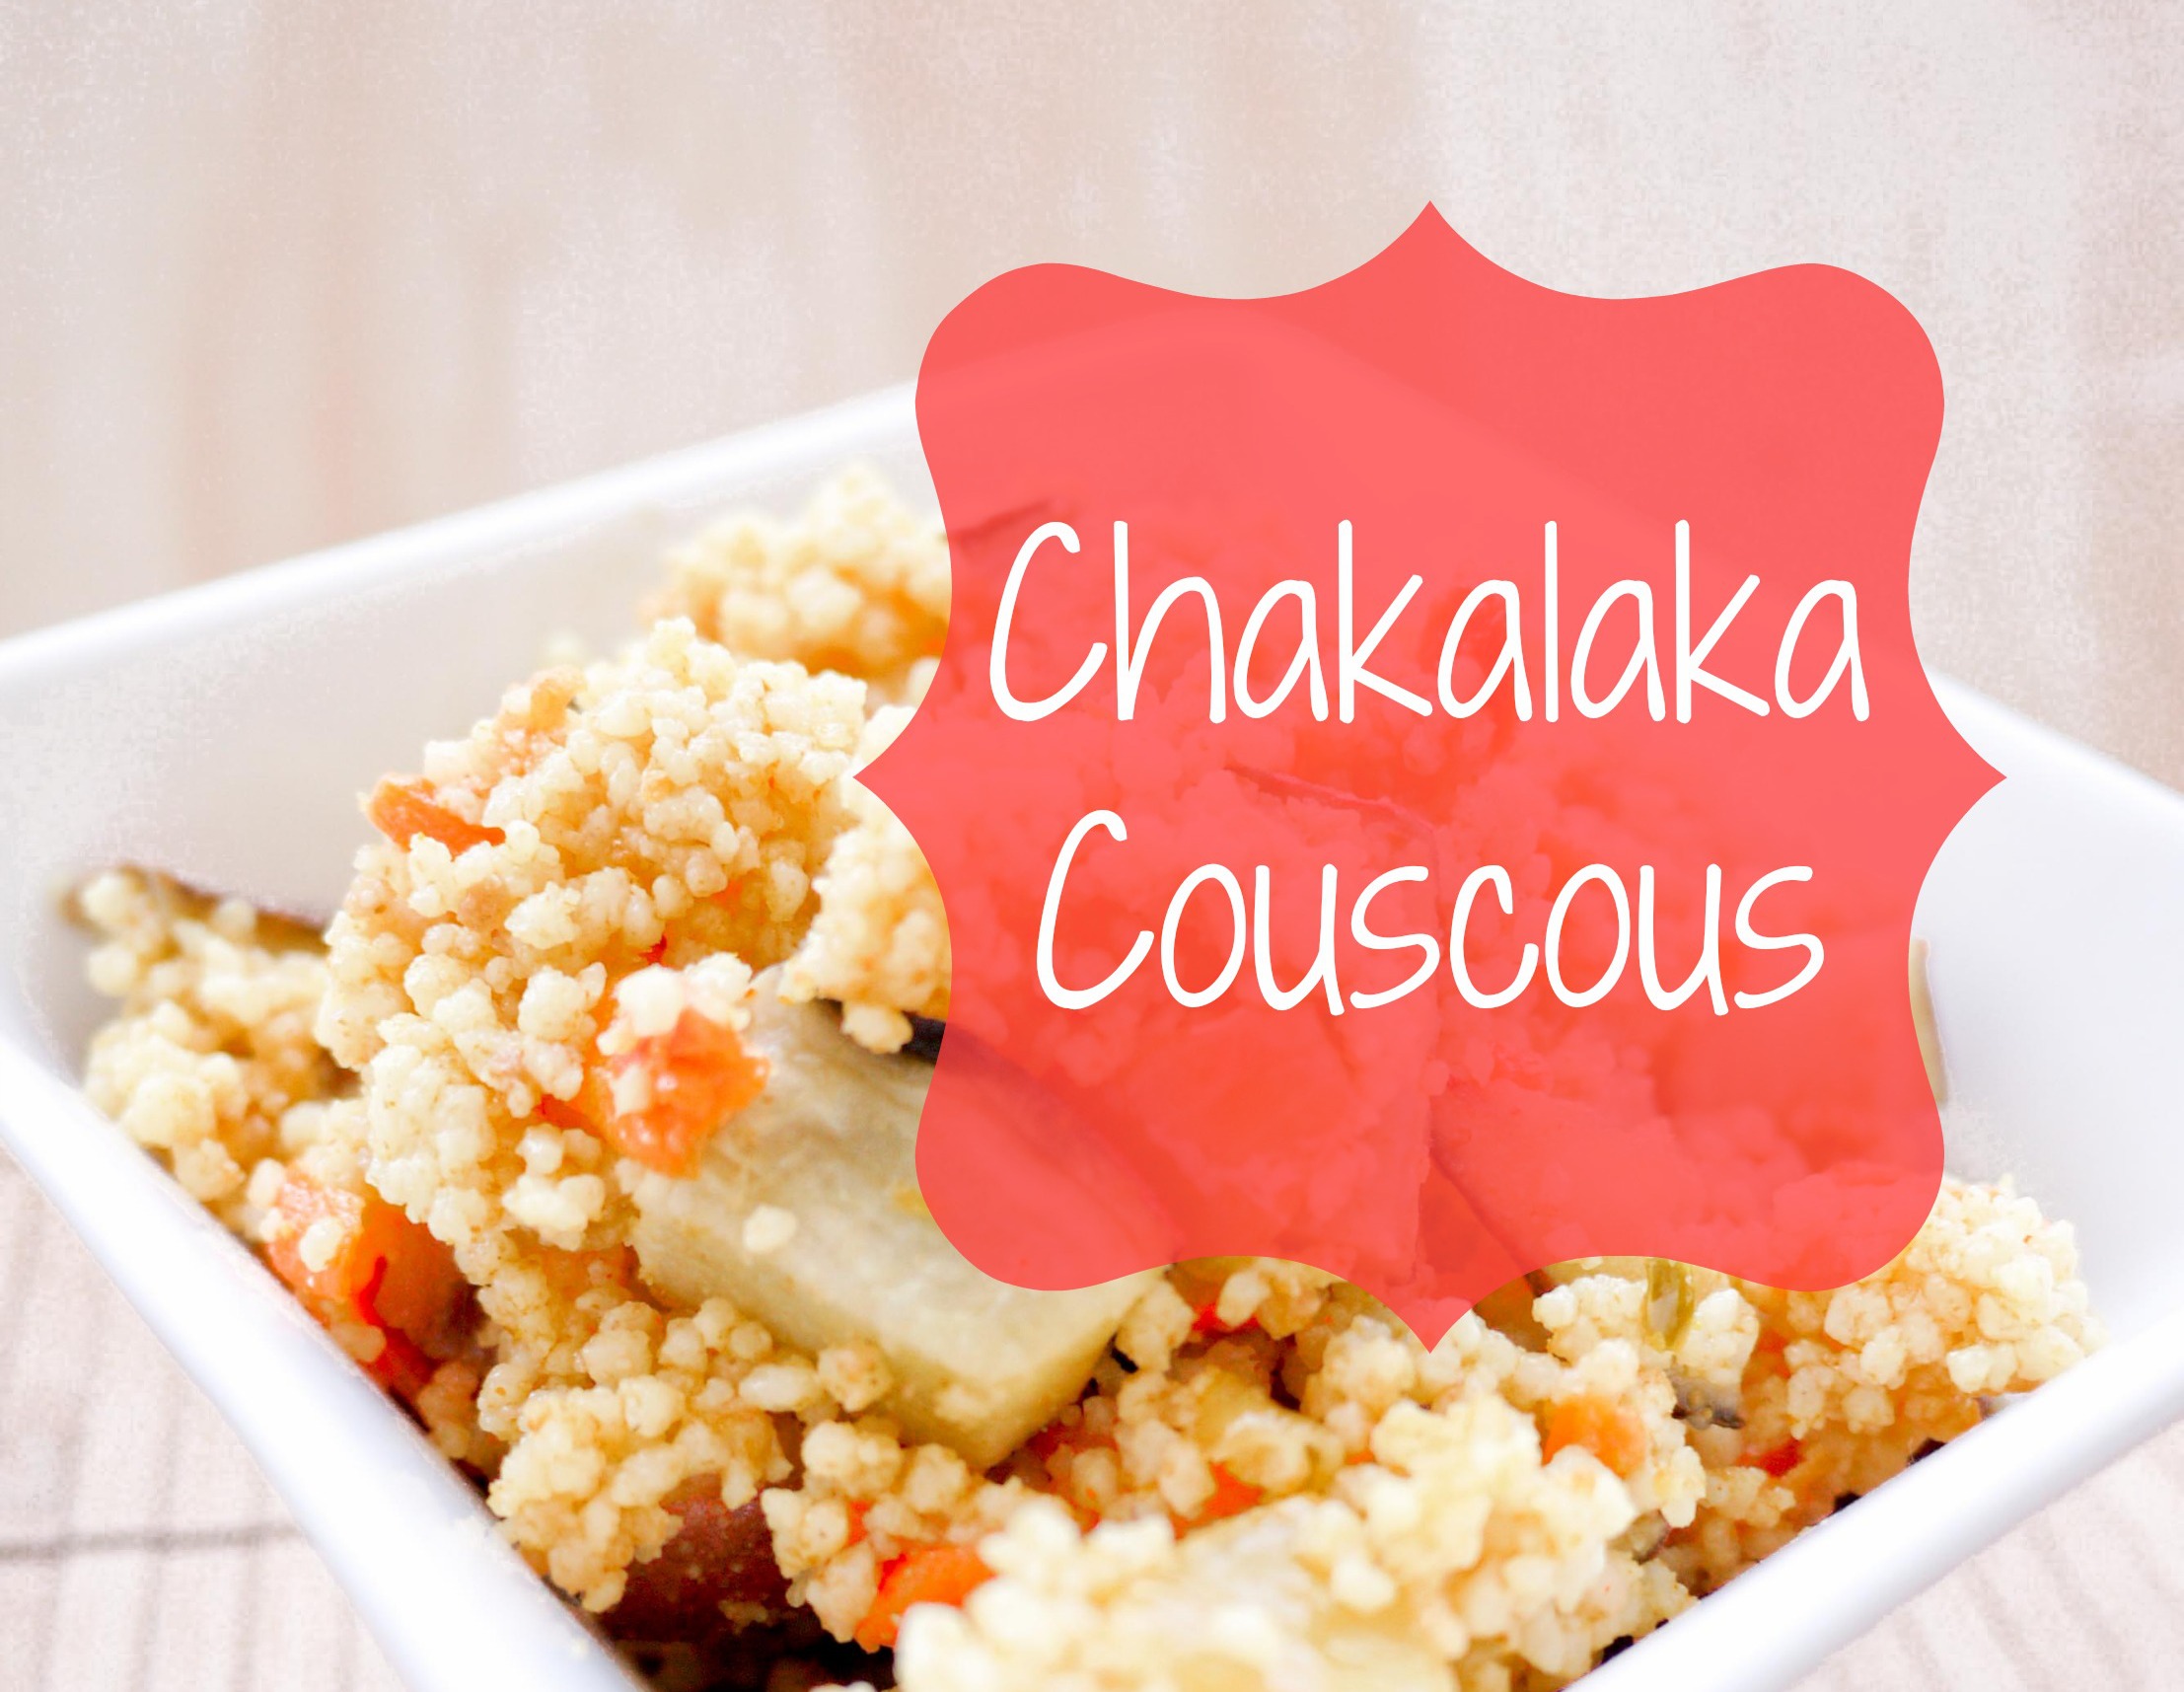 Chakalaka CousCous Recipe Milk and Cookies SA Home Page Image